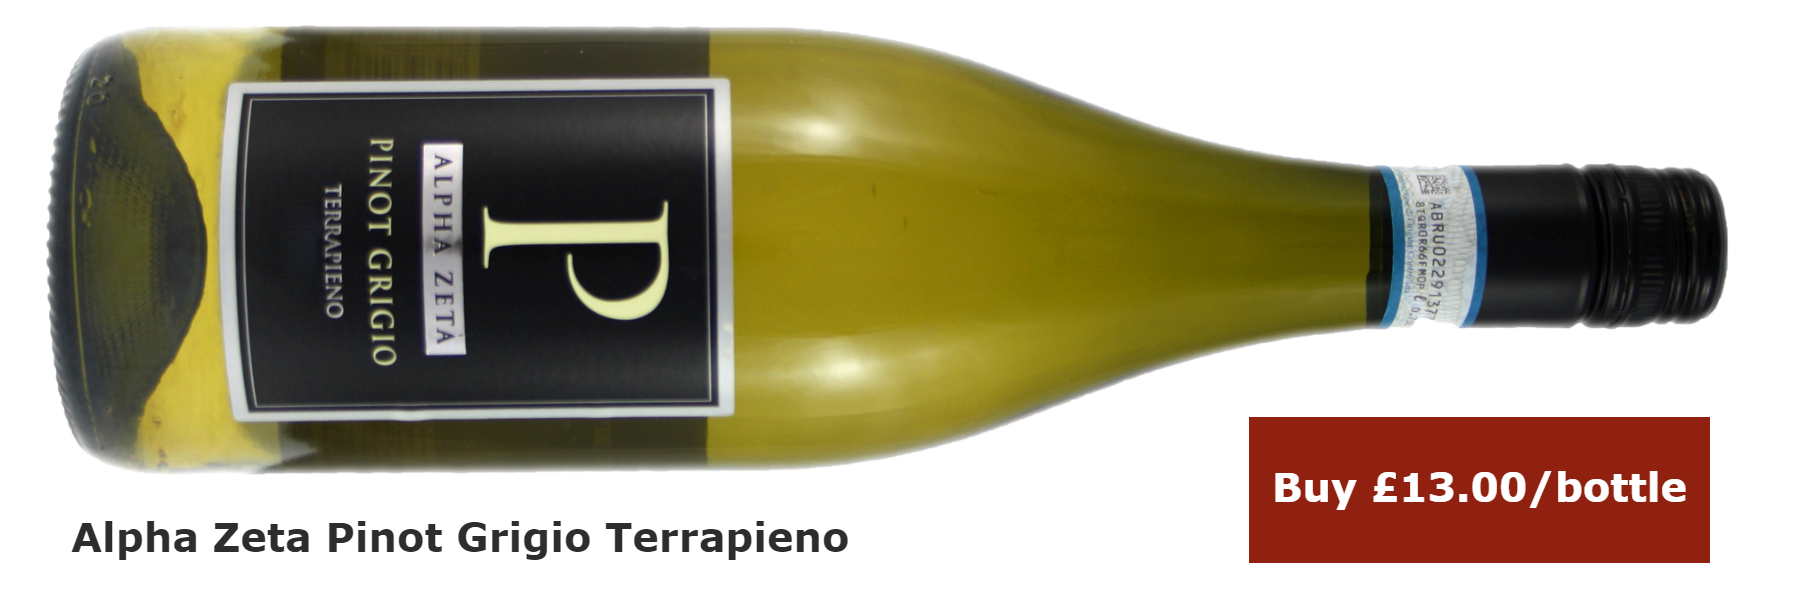 Buy Alpha Zeta Pinot Grigio Terrapieno £13.00/bottle